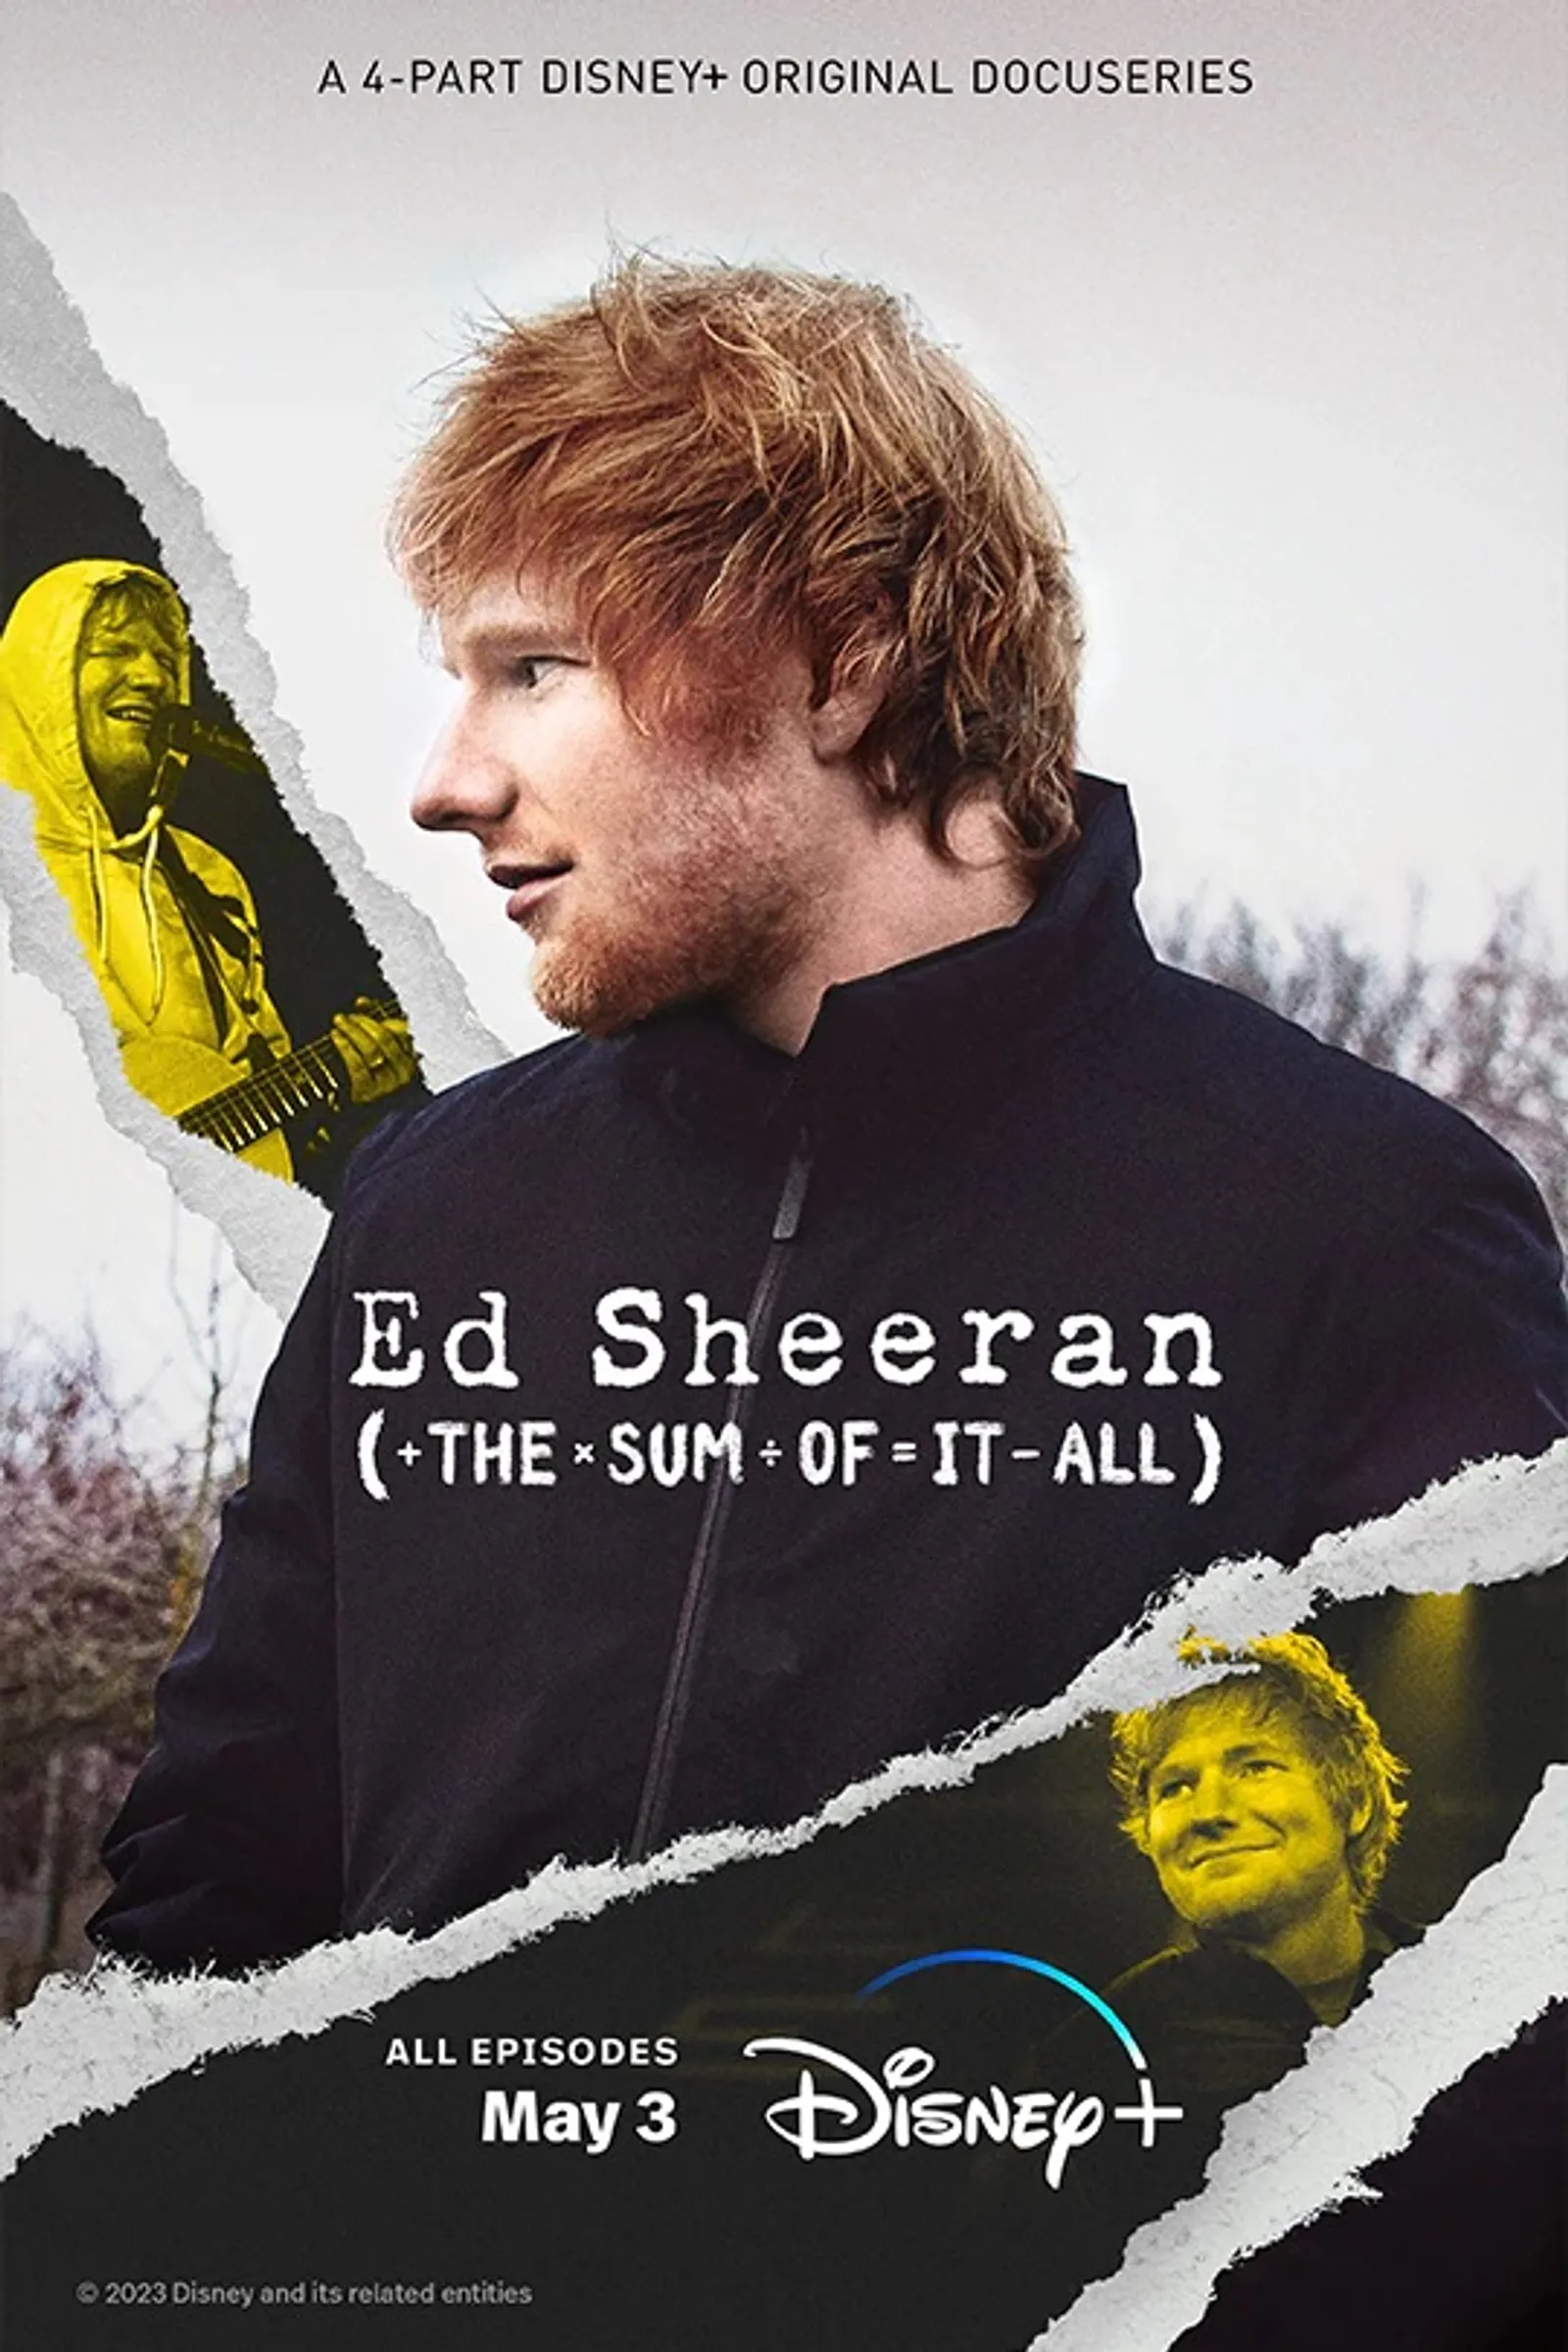 Lirik Ed Sheeran - "Eyes Closed", OTW Rilis Album Baru!